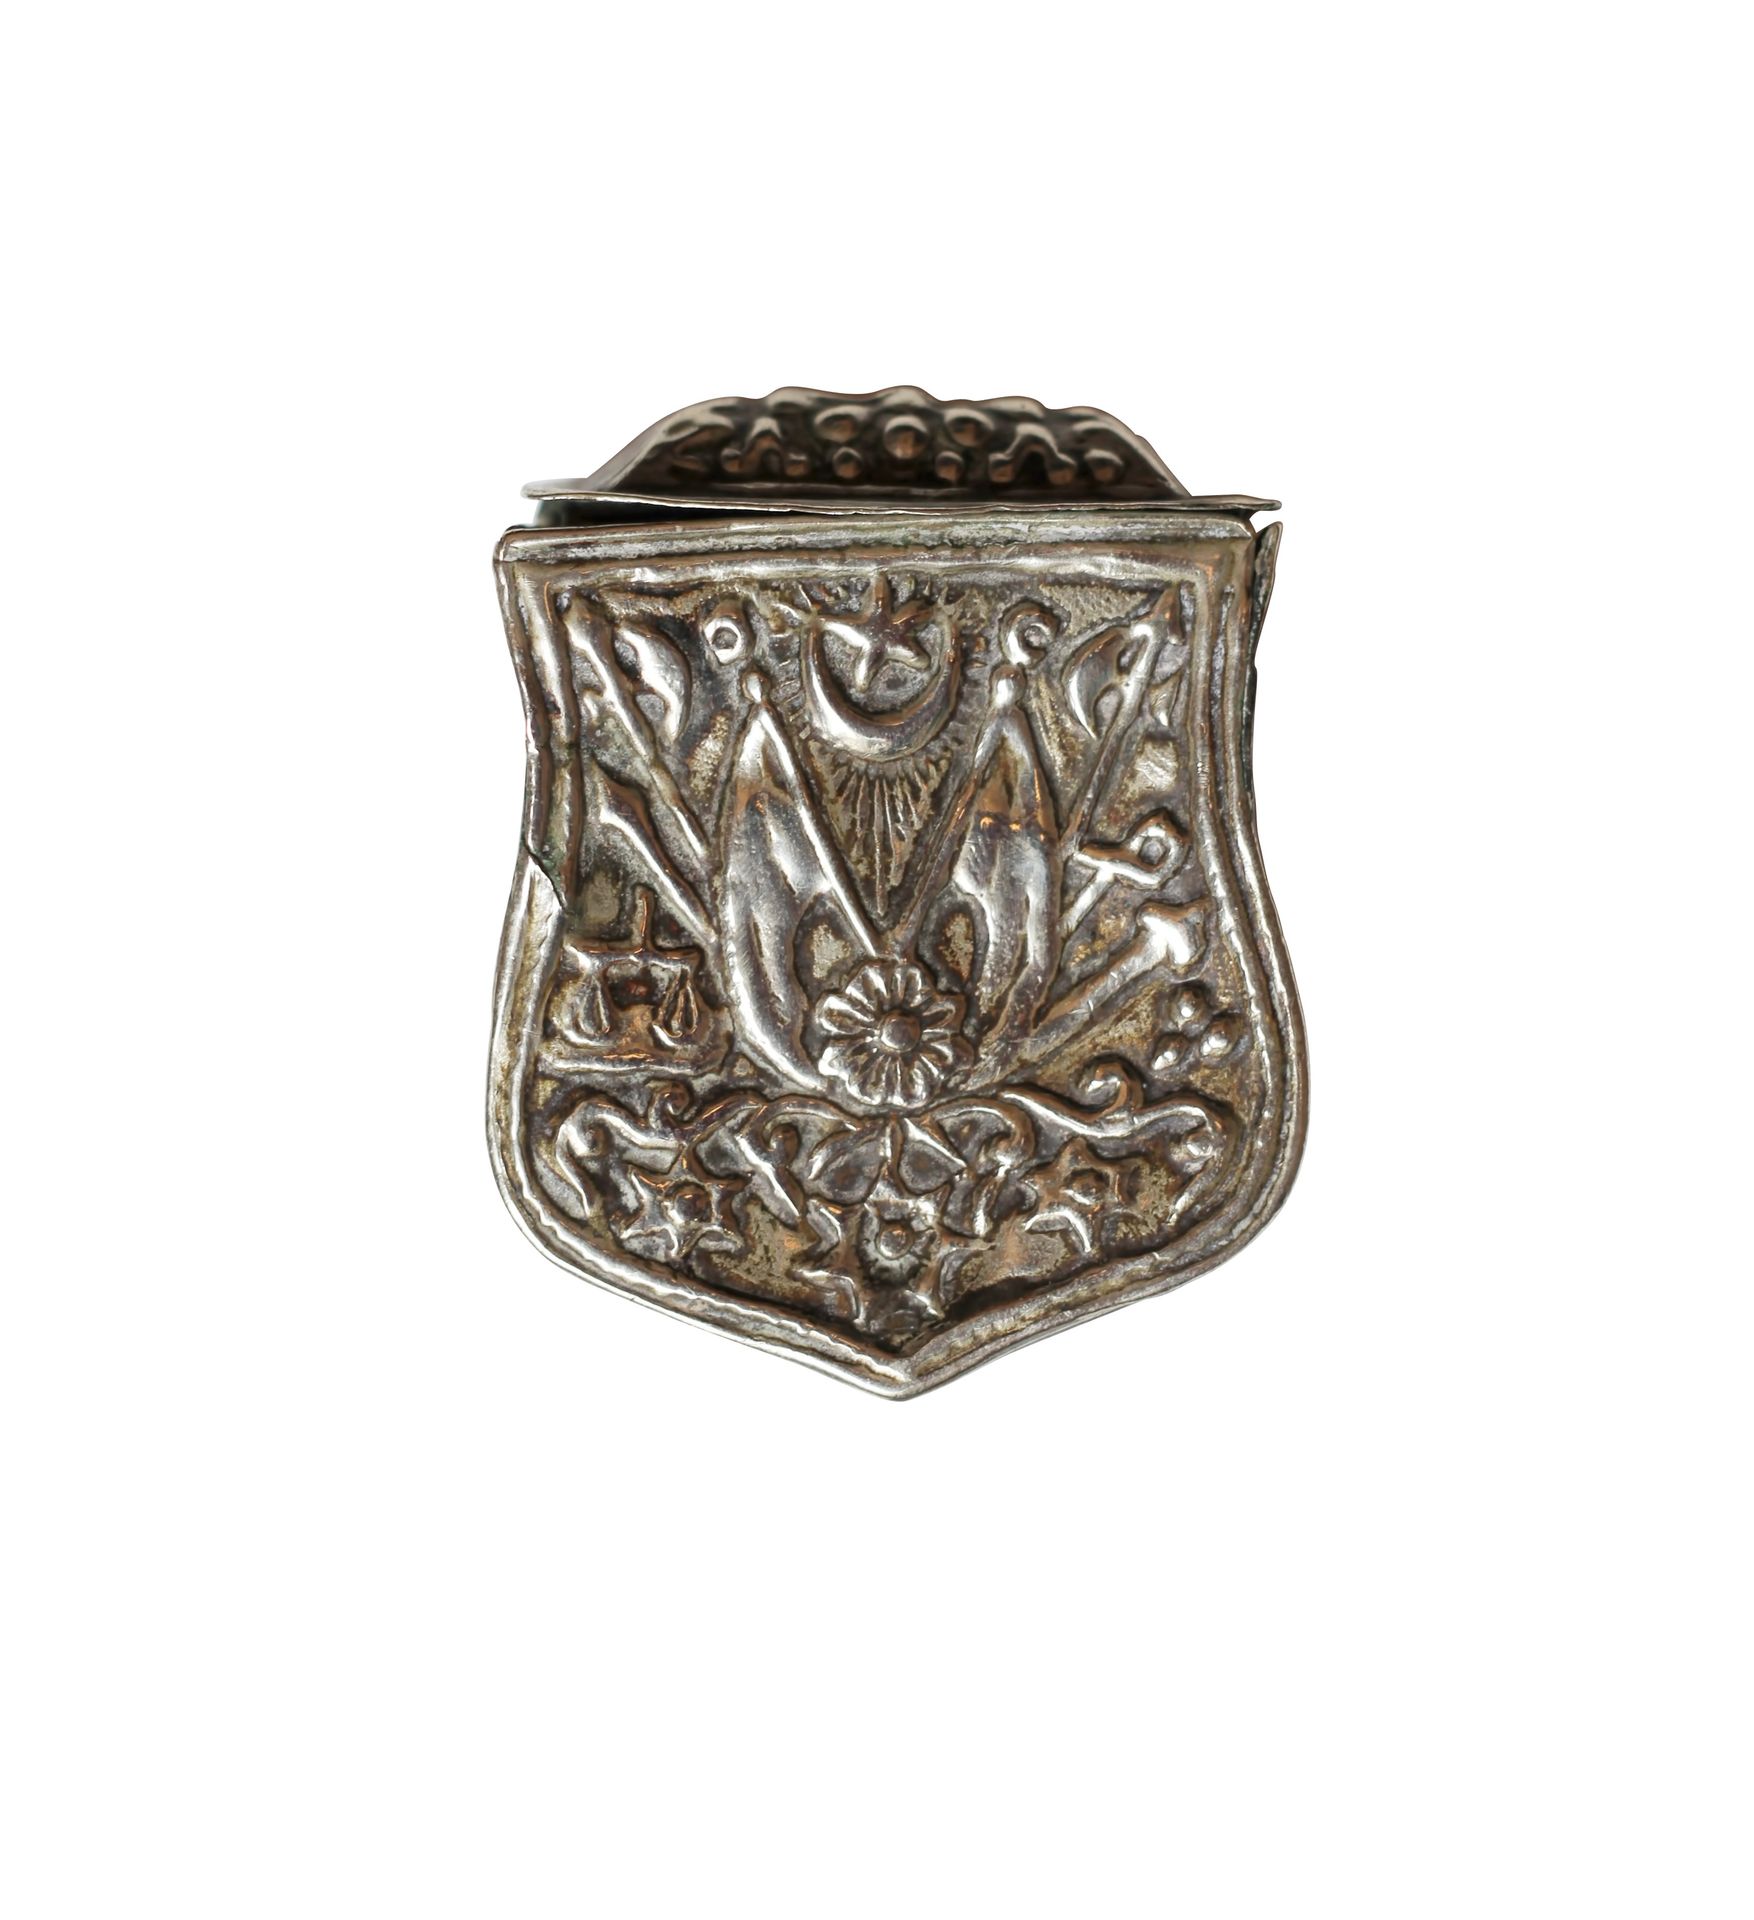 ? 19th century Ottoman white metal cartridge Α 19世纪奥斯曼帝国的白色金属盒（medoulari），背面有青铜浮&hellip;